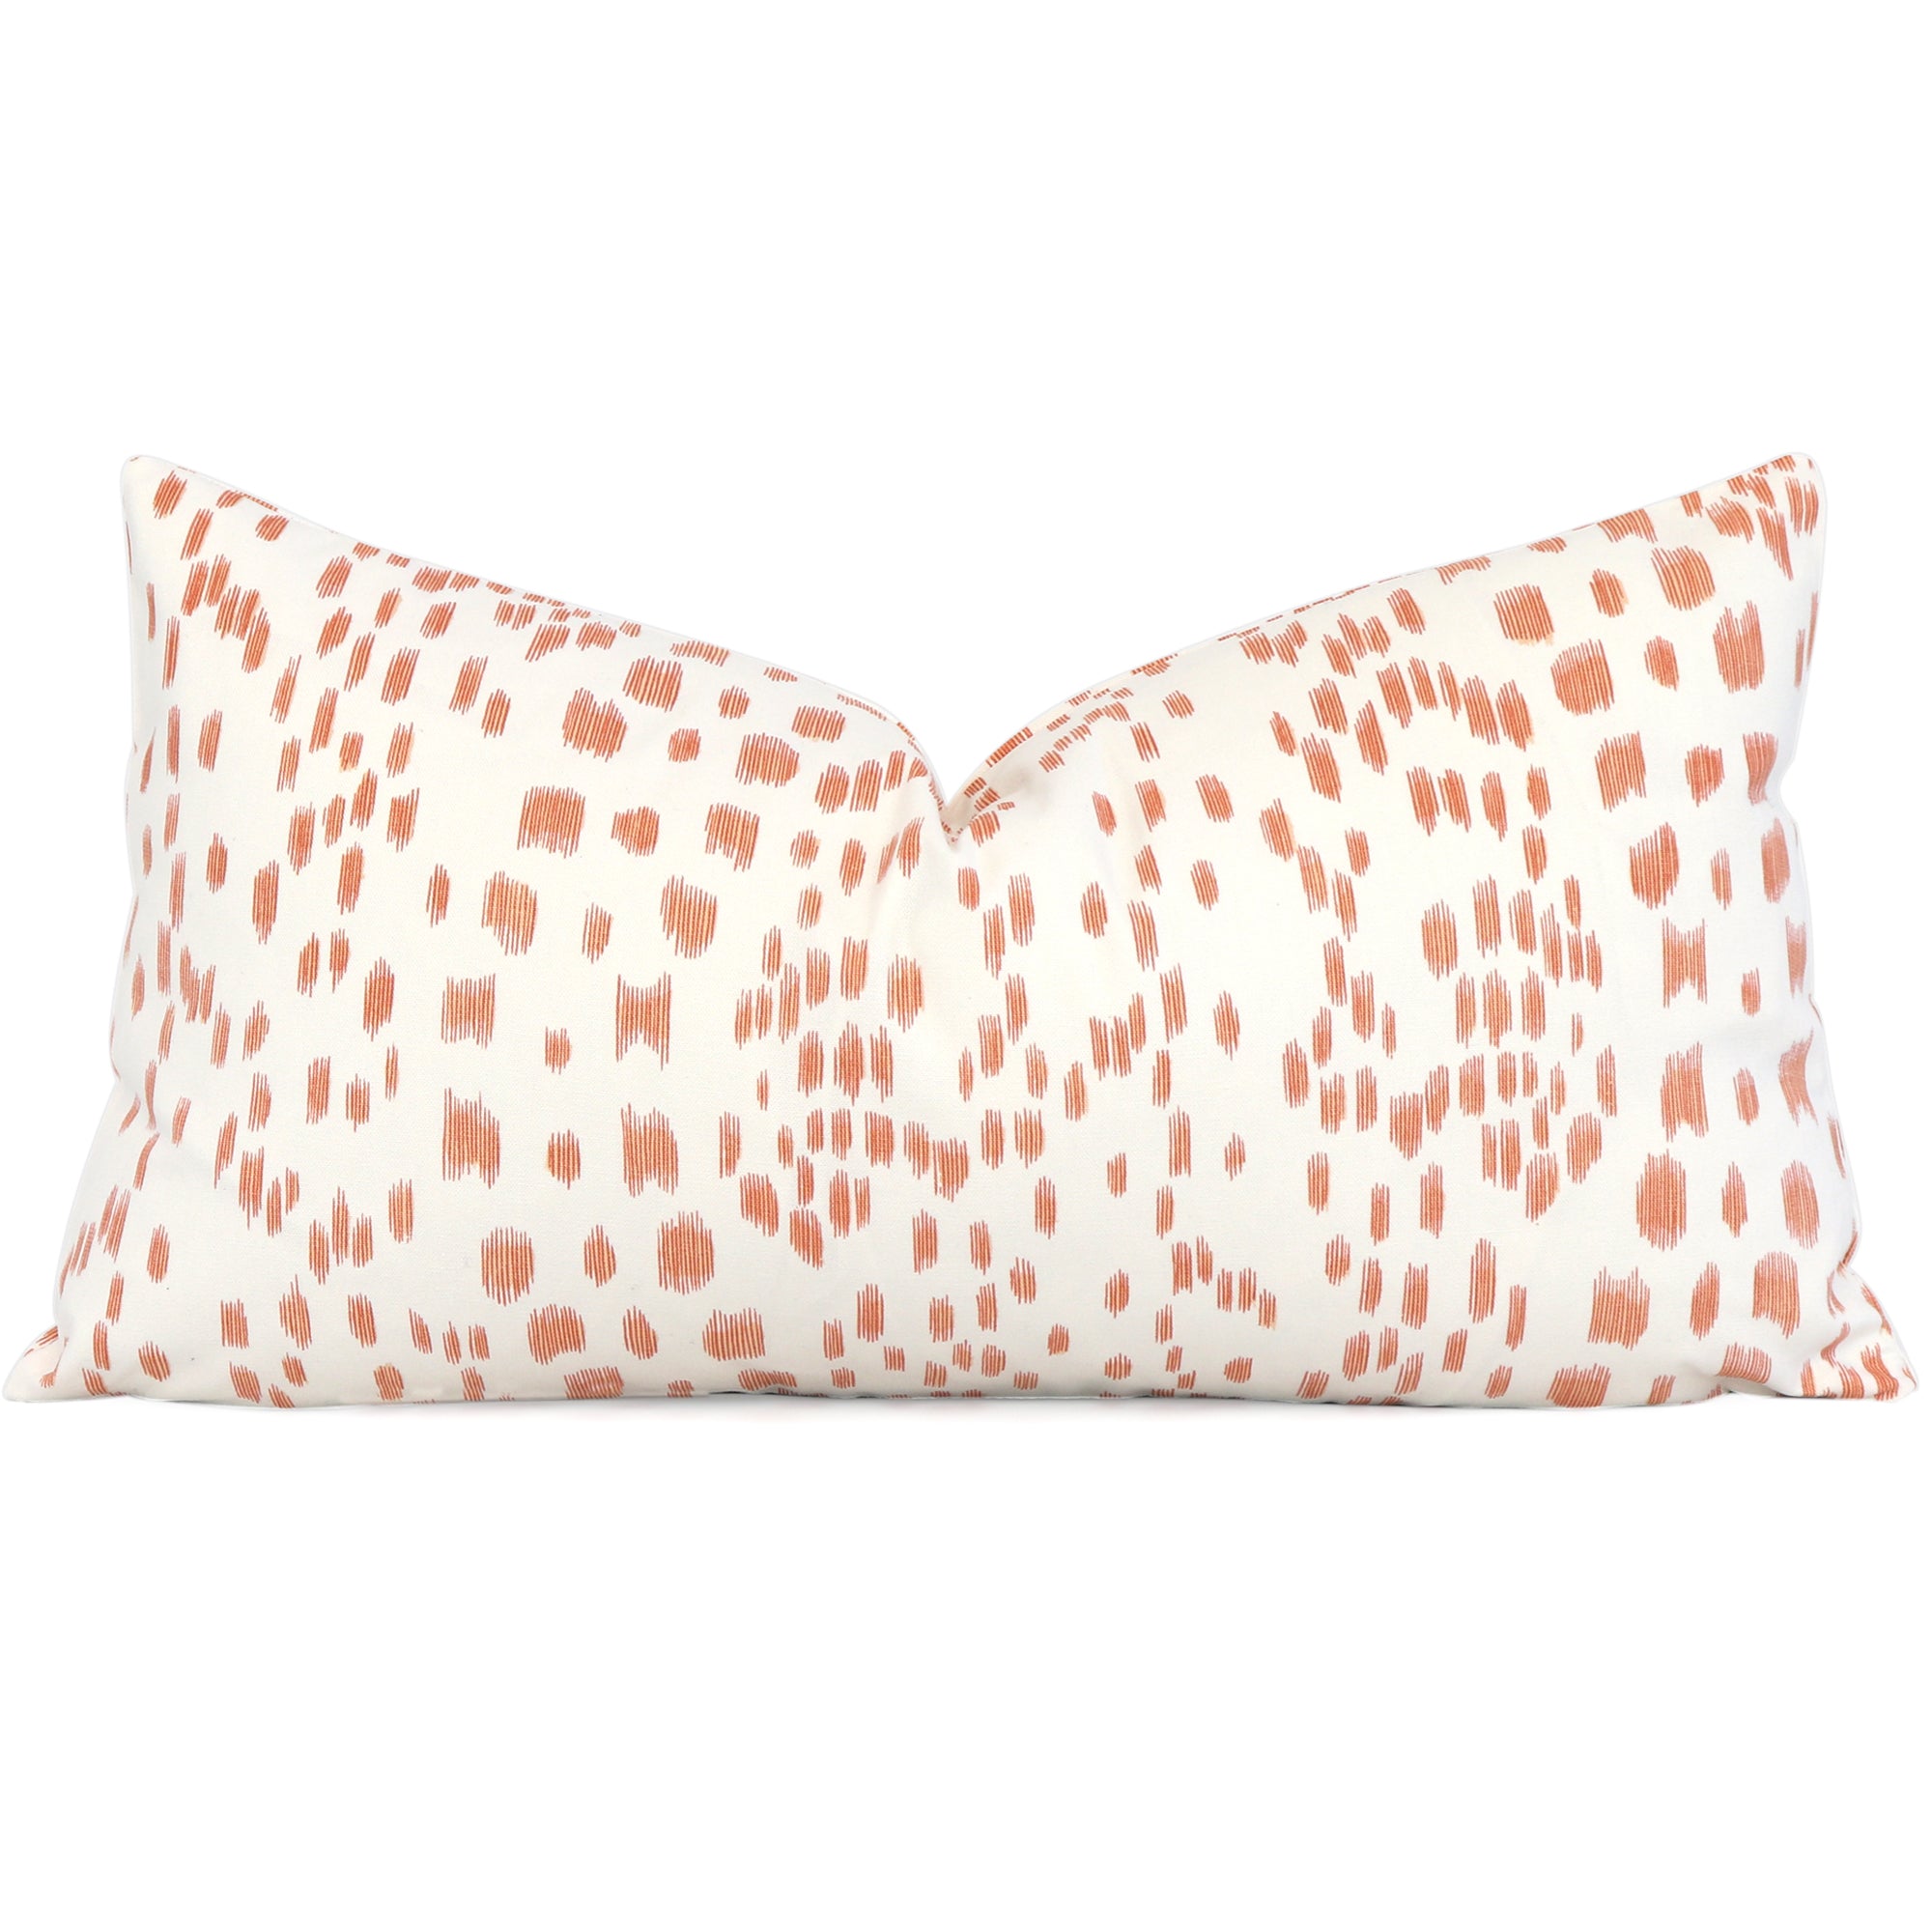 Les Touches Tangerine Lumbar Throw Pillow Cover 